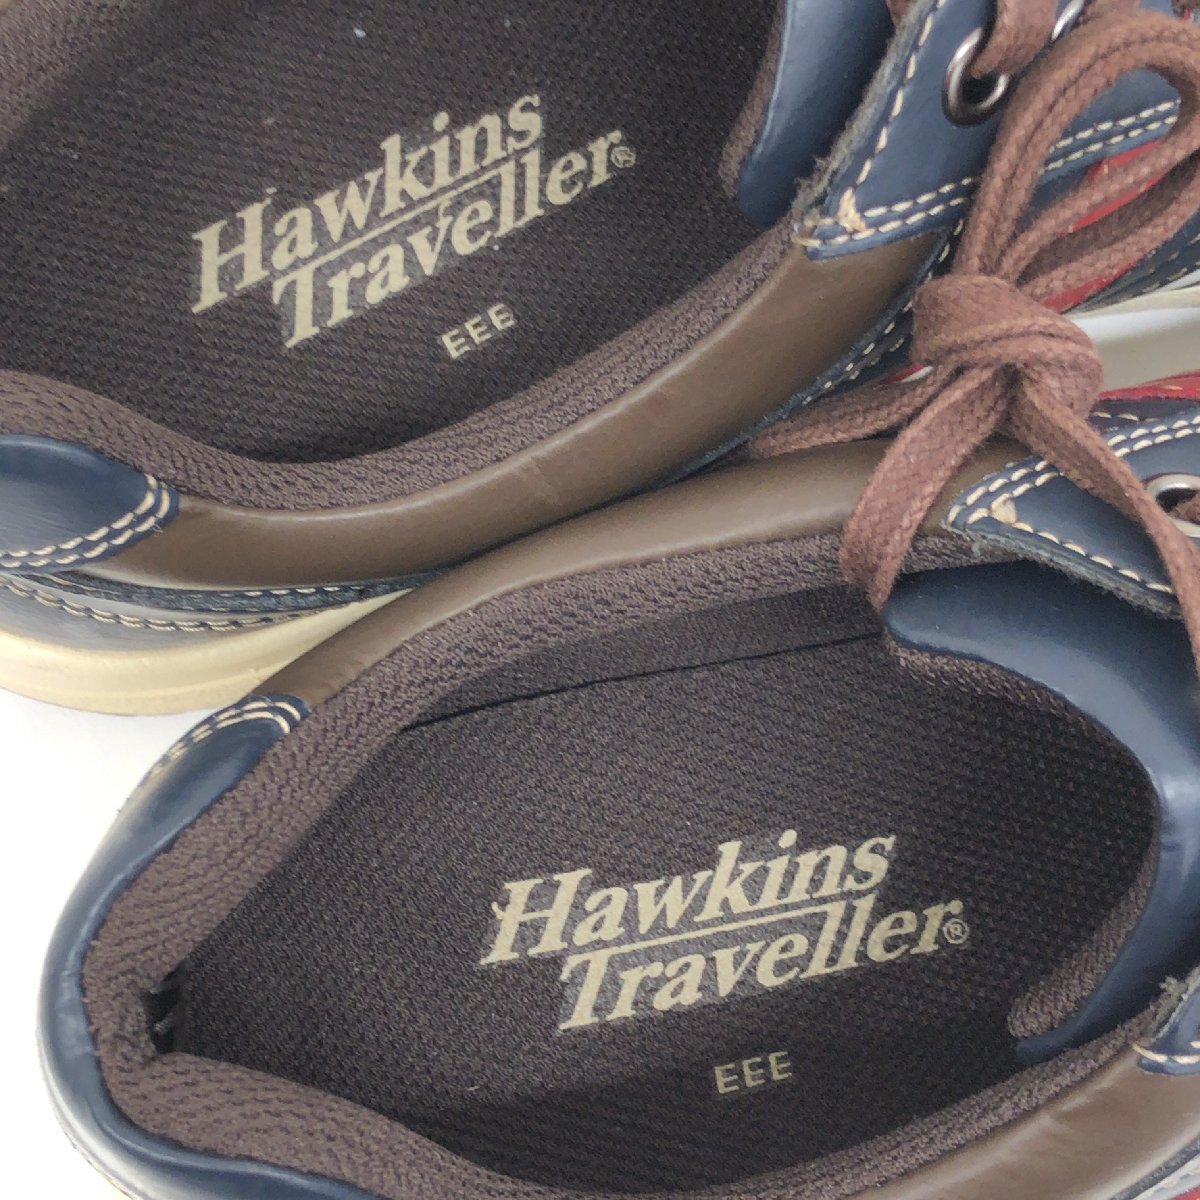 ●Hawkins Traveller ホーキンス 軽量 エコレザー スニーカー 24.5cm 紺 ネイビー レザースニーカー カジュアルシューズ 革靴 防滑 メンズの画像5